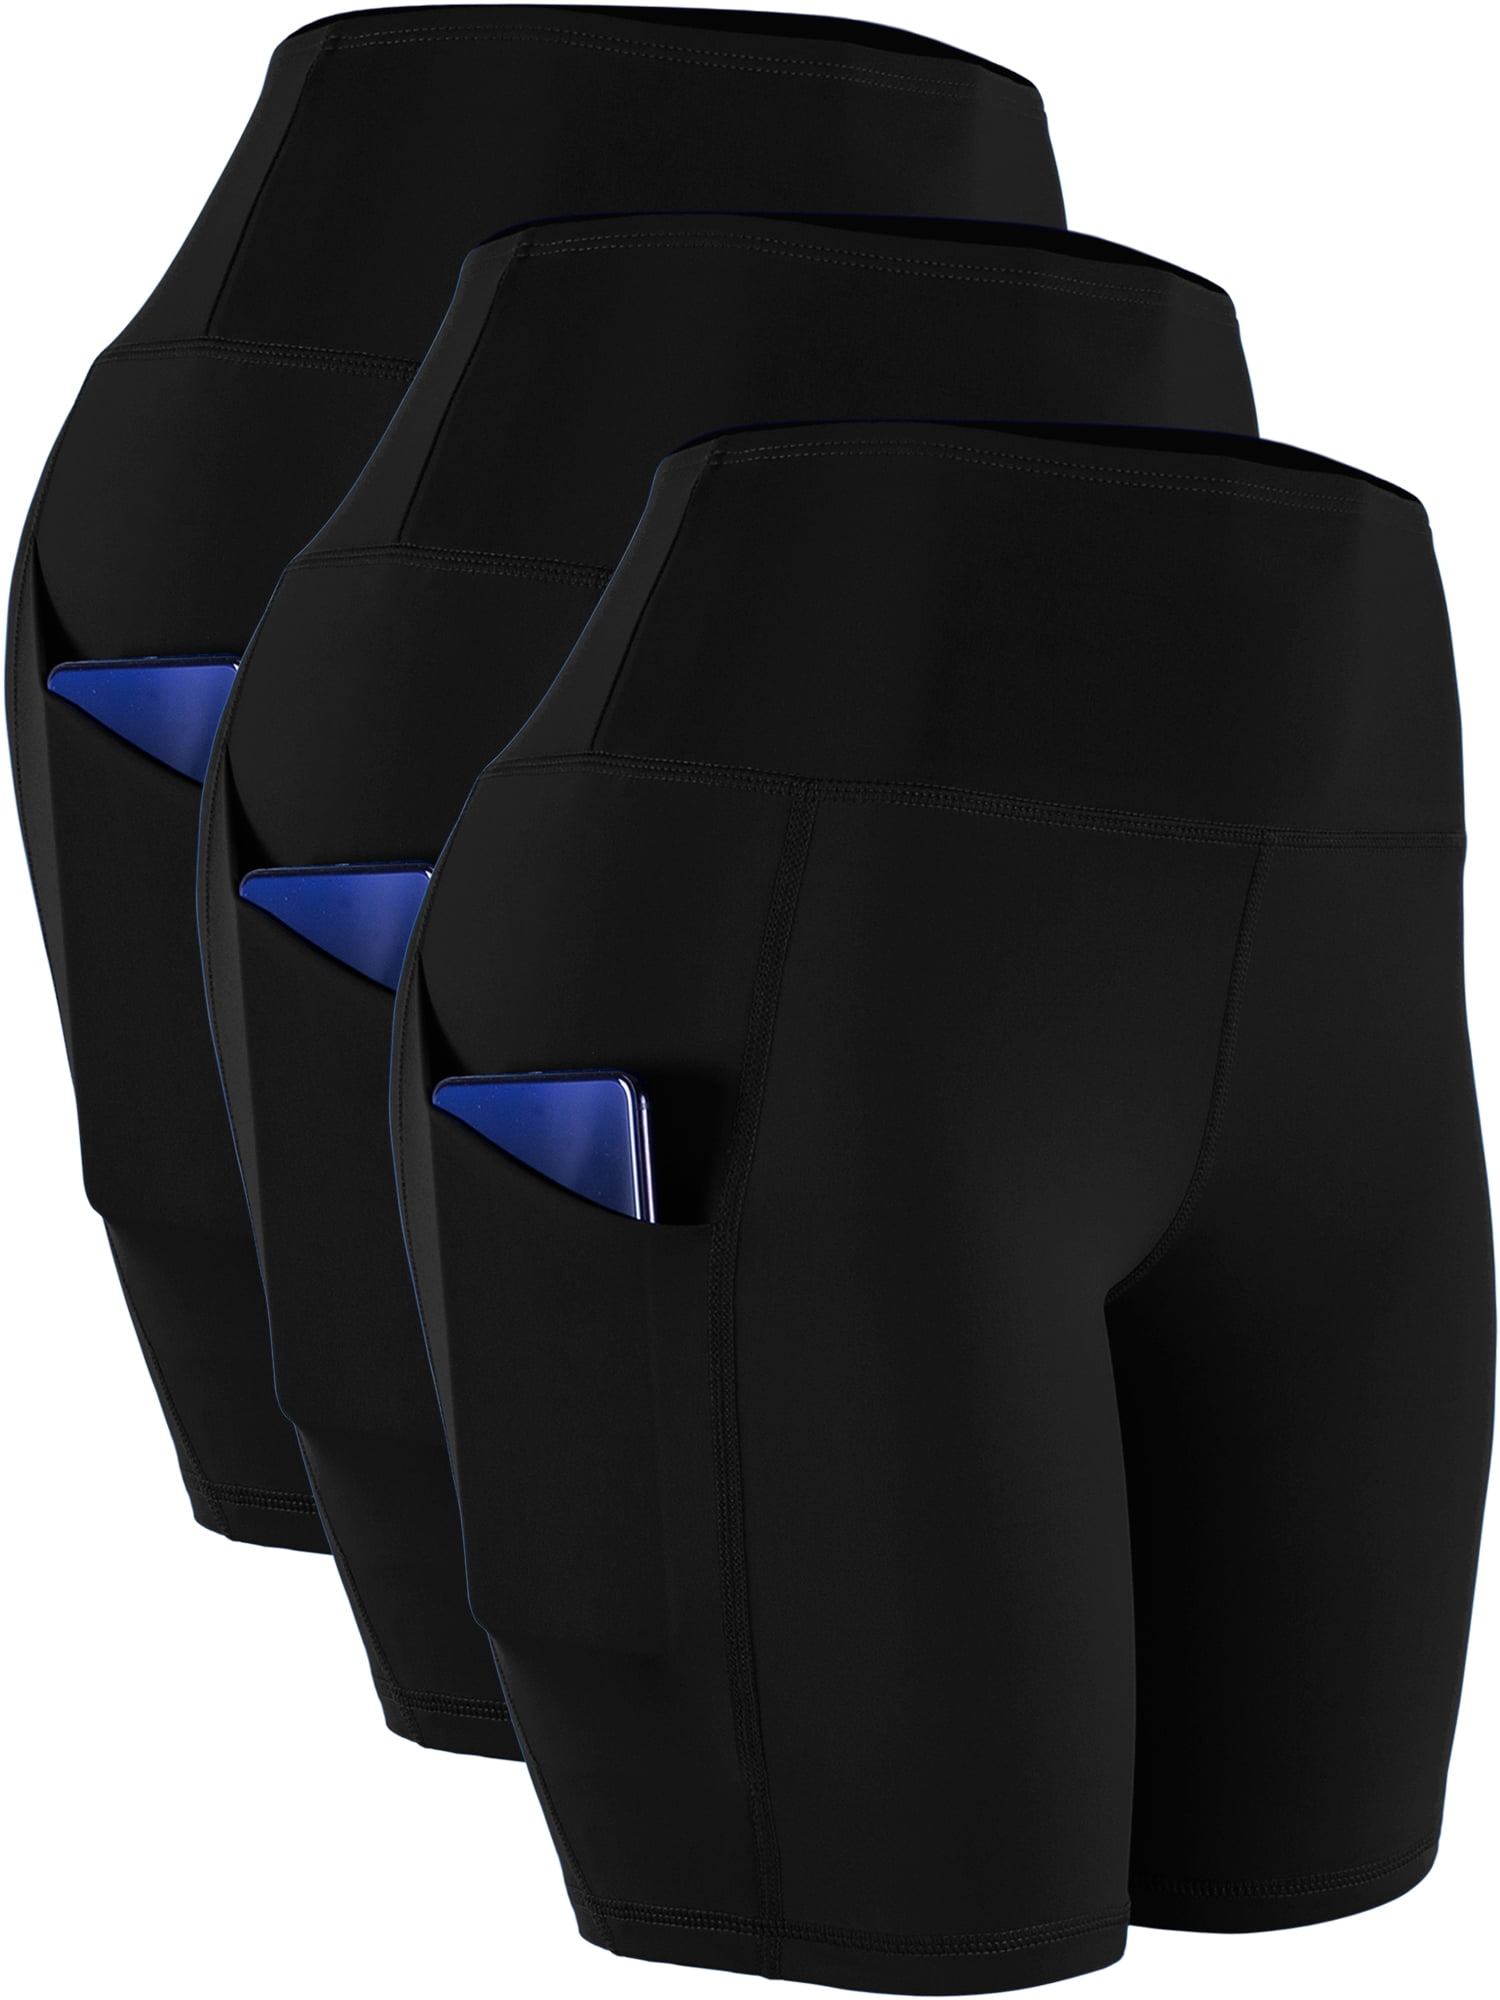 DPOIS Women's Shiny Metallic Workout Leggings High Waist Compression Yoga  Pants Tights Activewear 